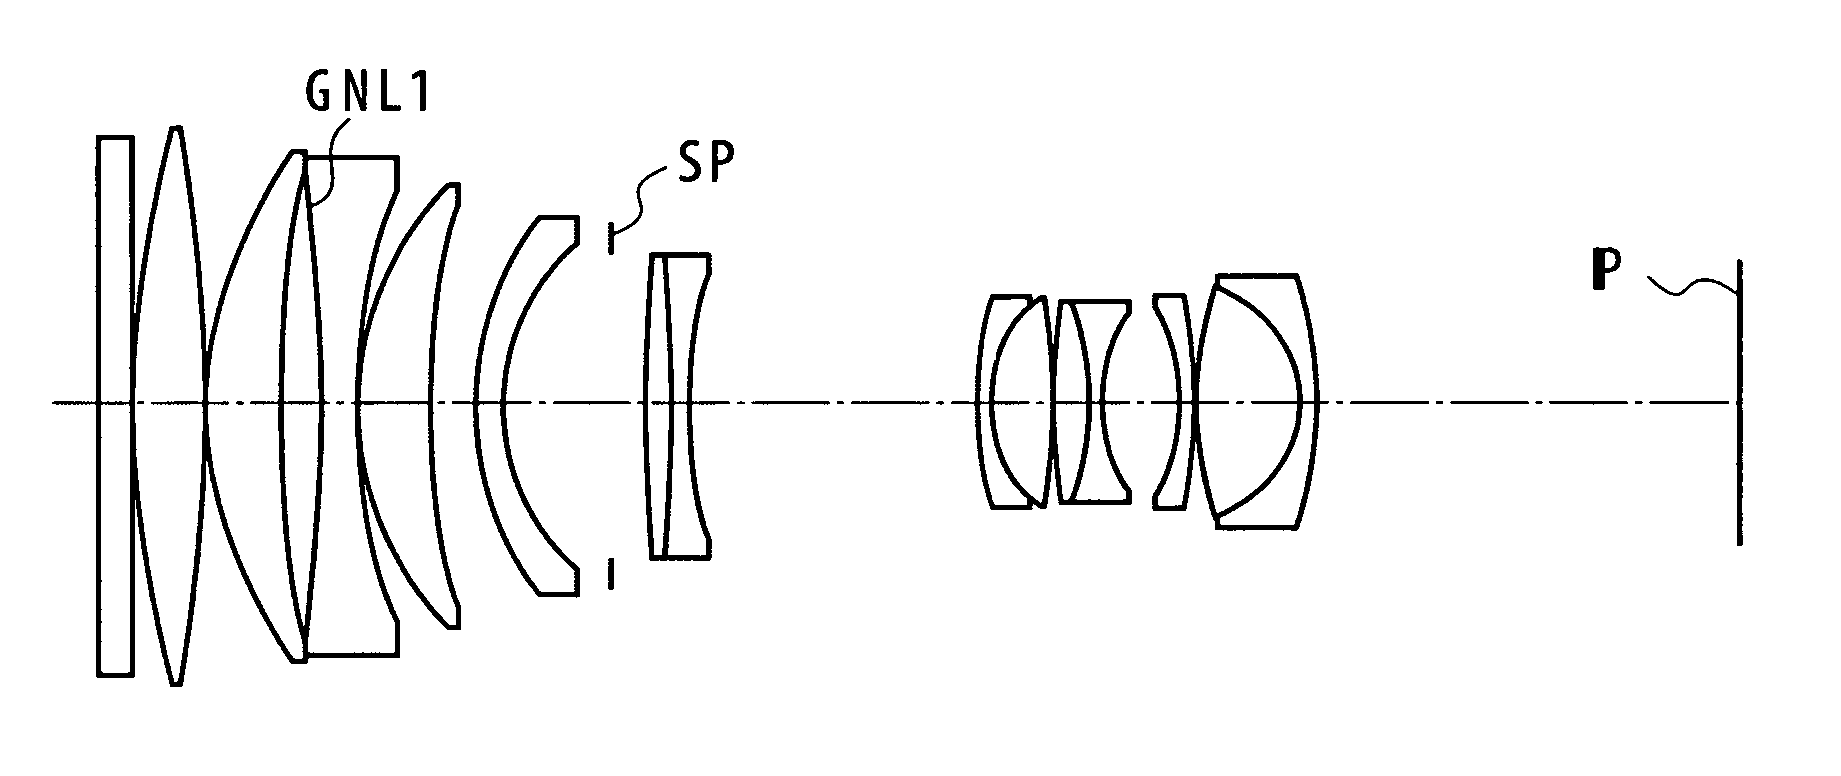 Optical system